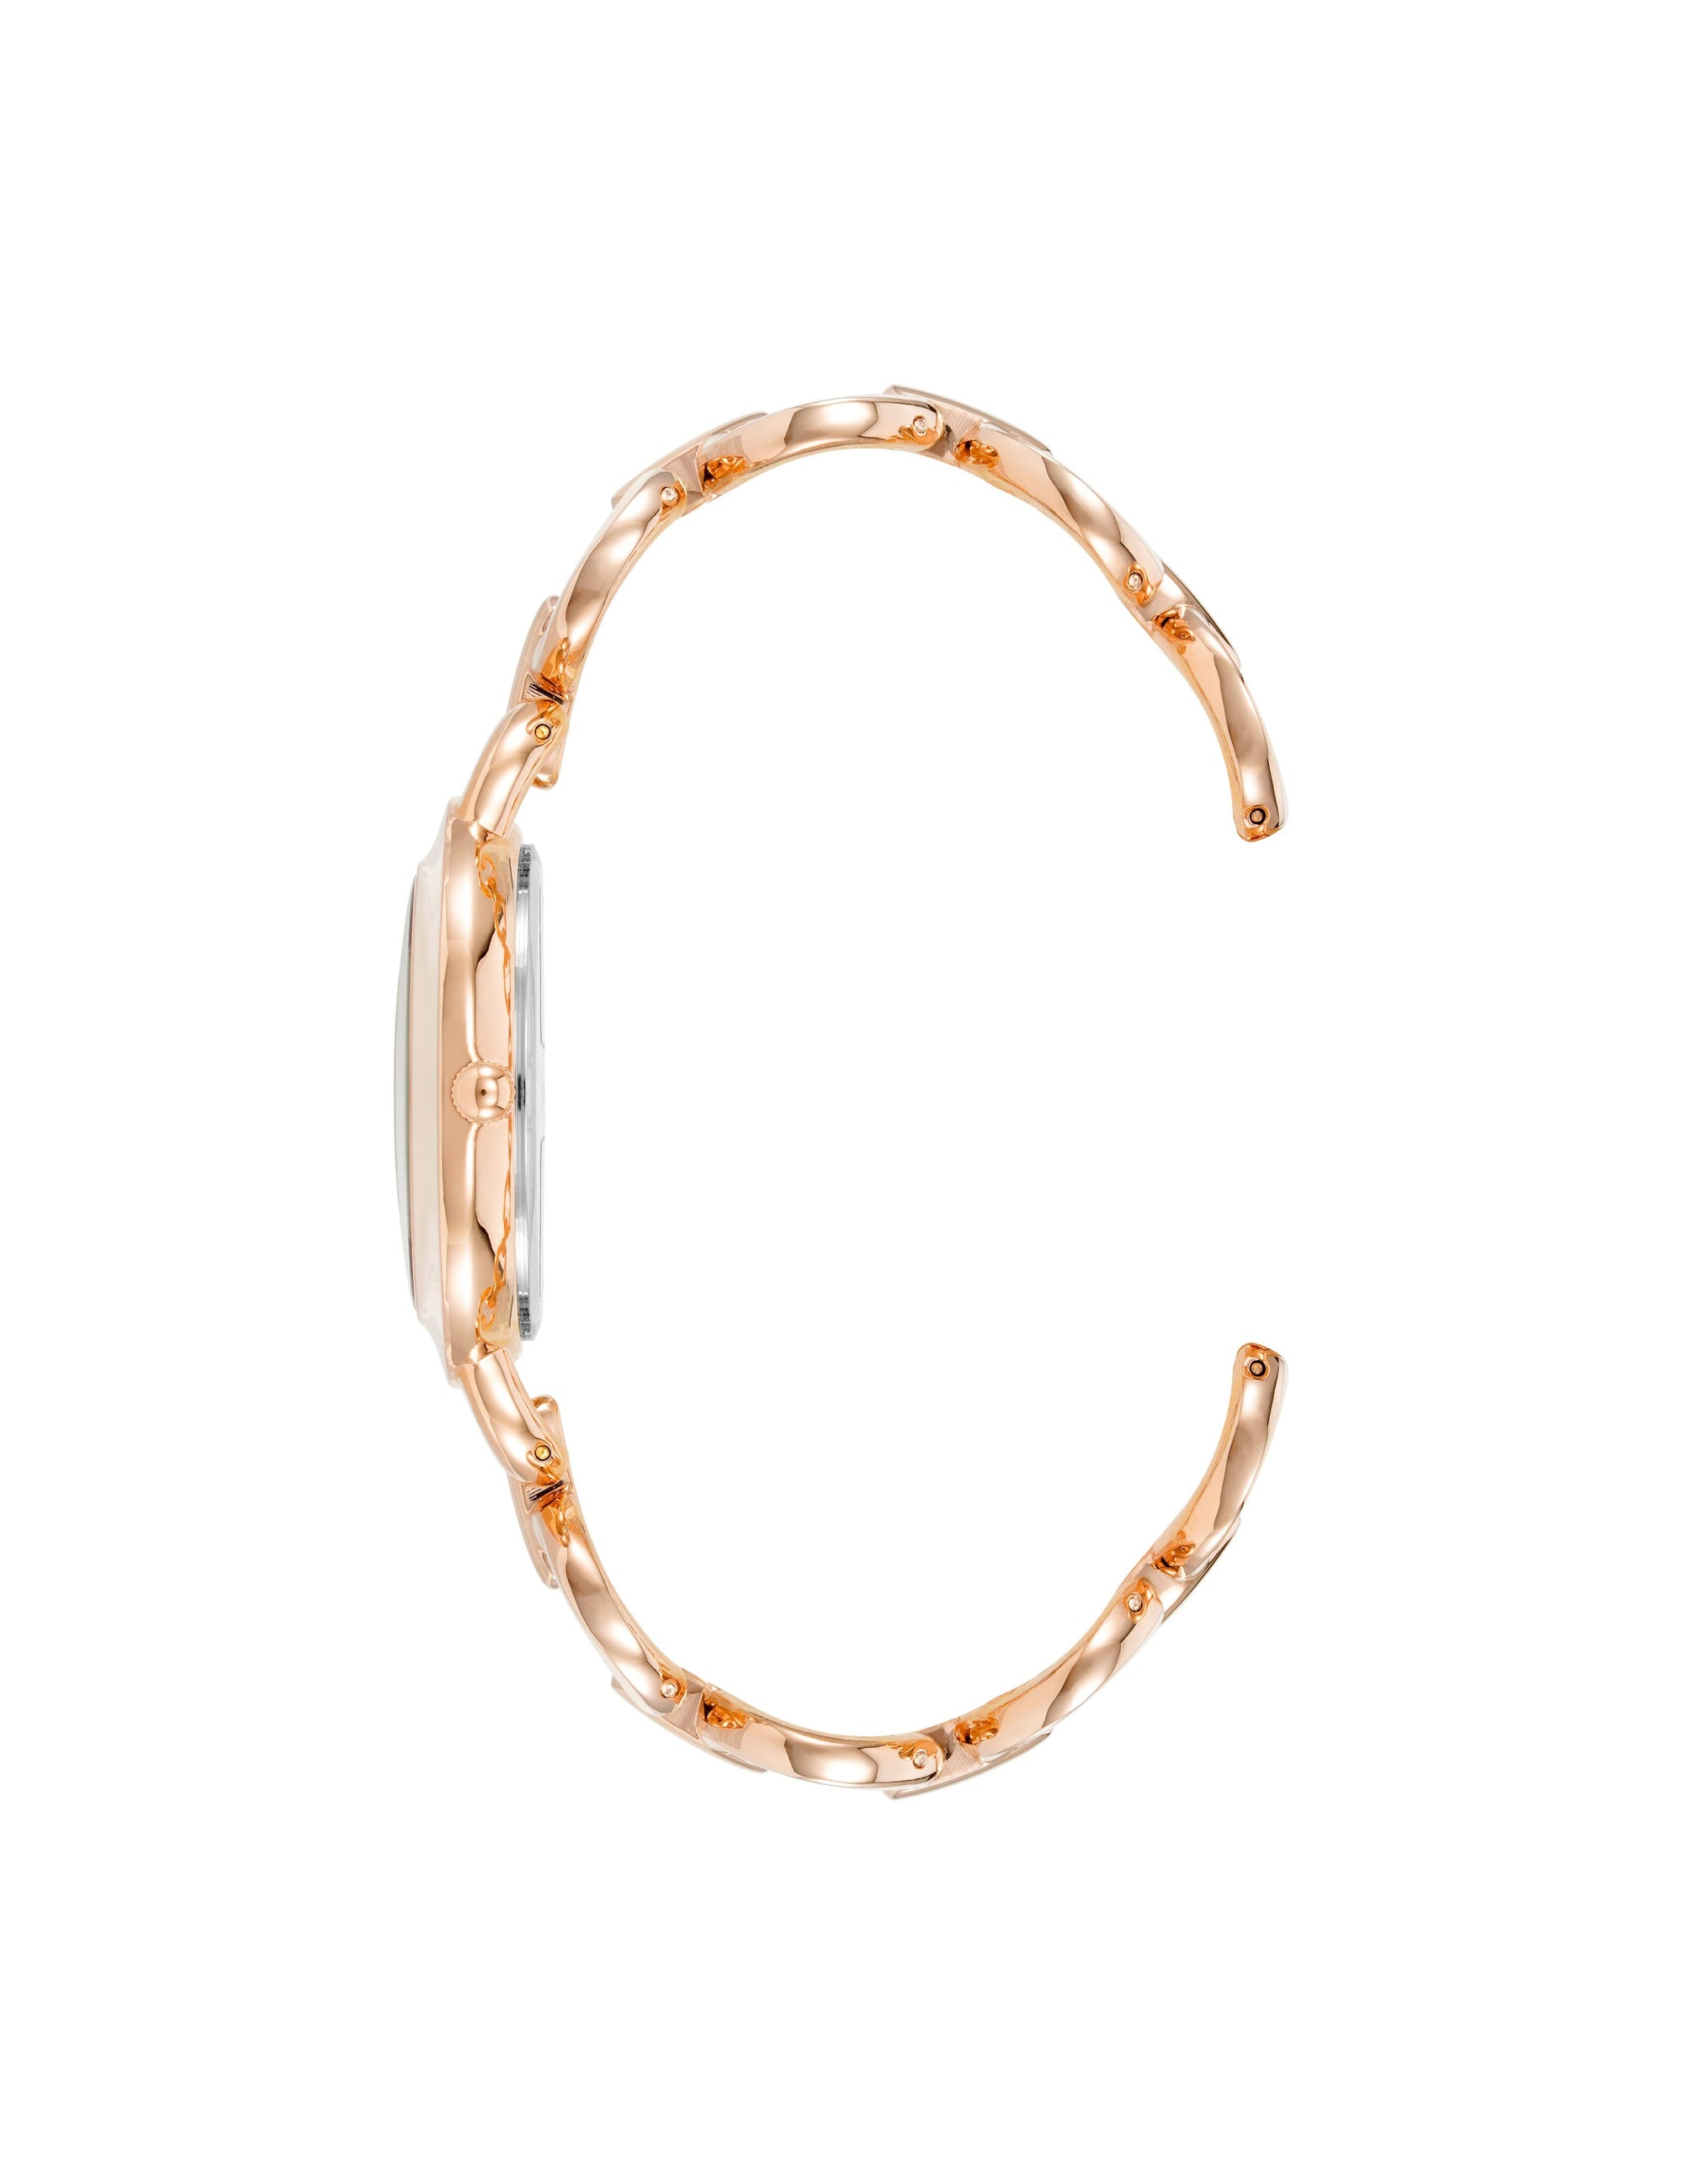 Anne Klein Blush Pink/ Rose Gold Tone Boyfriend Circular Link Bracelet Watch Set